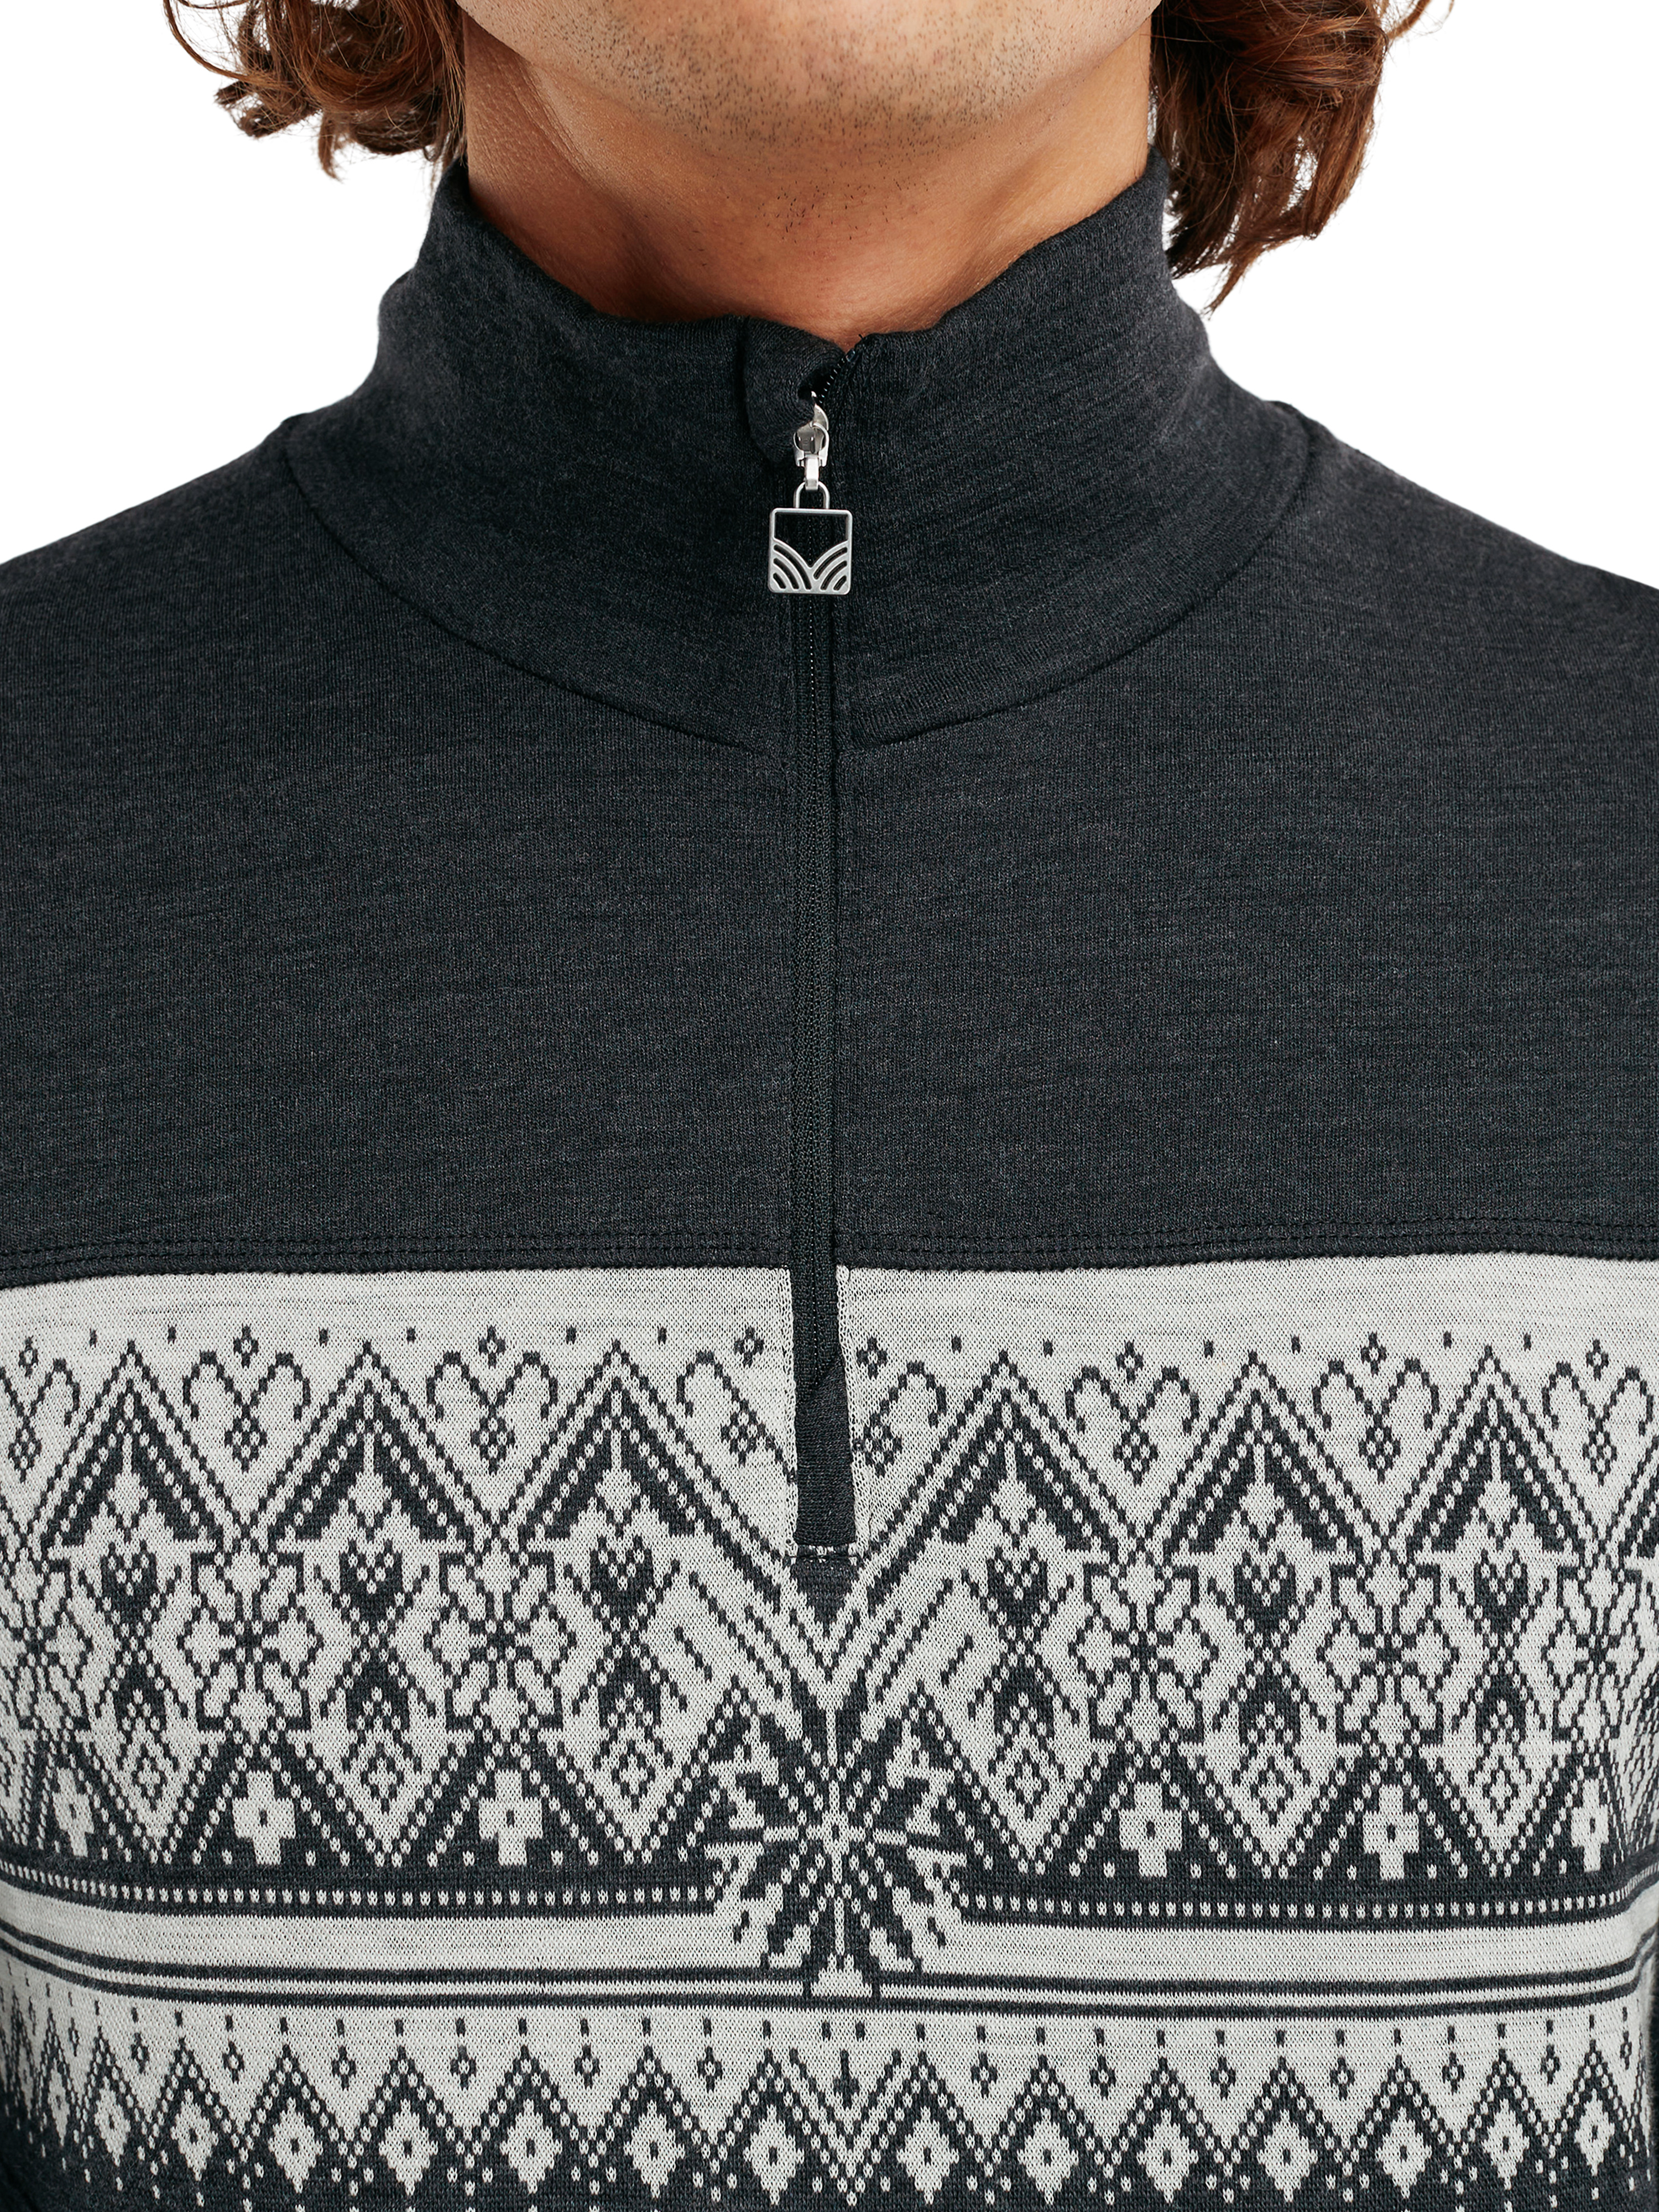 Moritz Basic Sweater - Men - Dark Charcoal - Dale of Norway - Dale